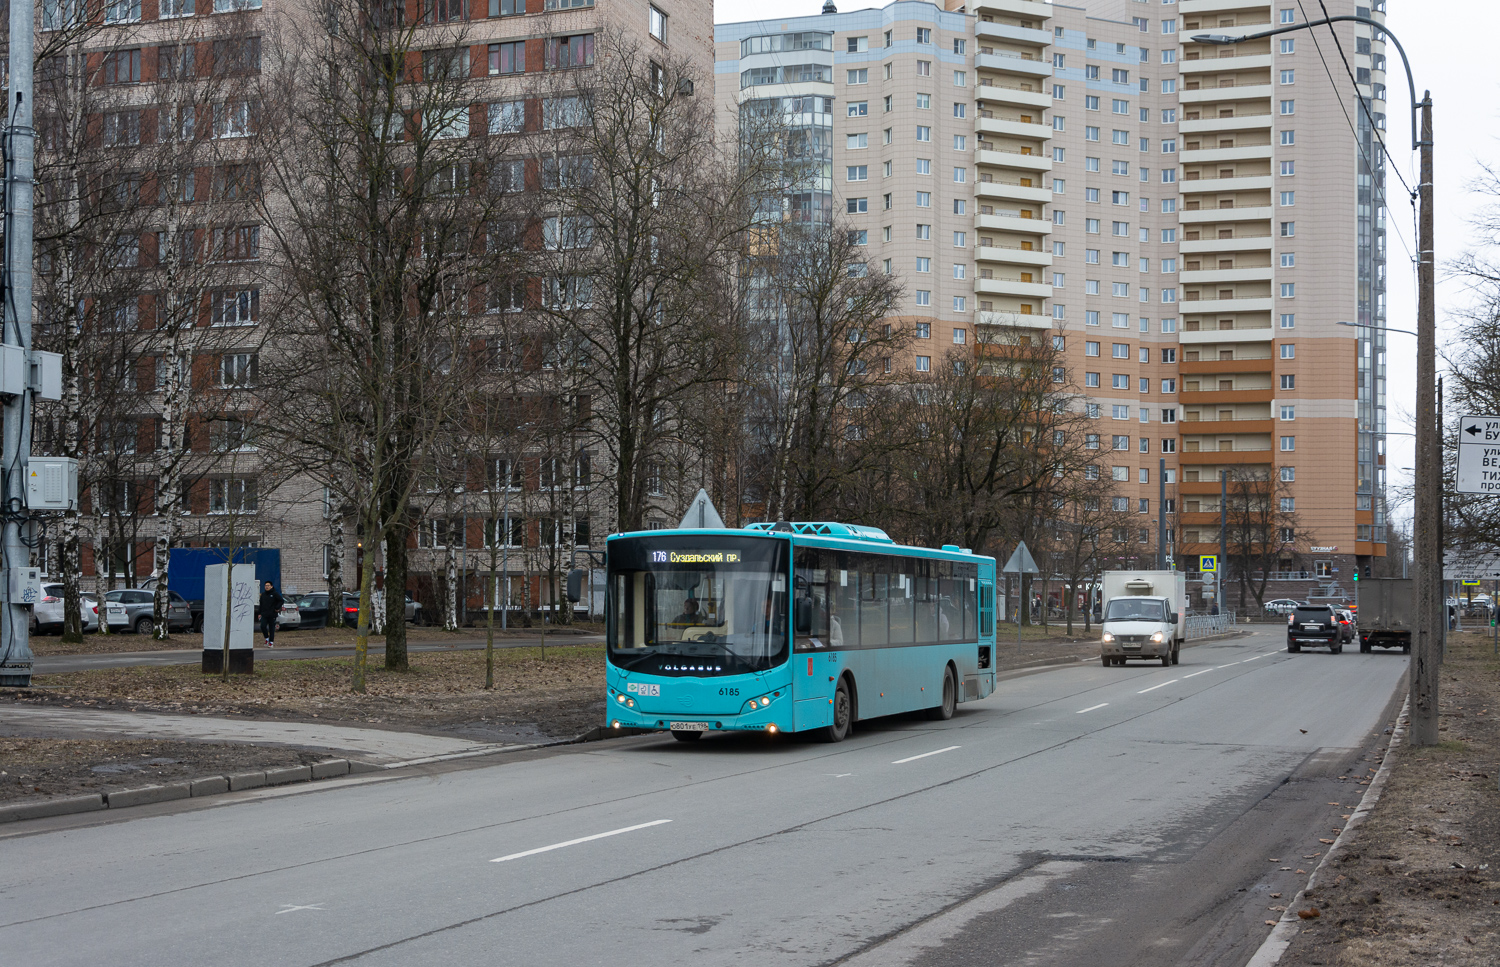 Petersburg, Volgabus-5270.G2 (LNG) # 6185